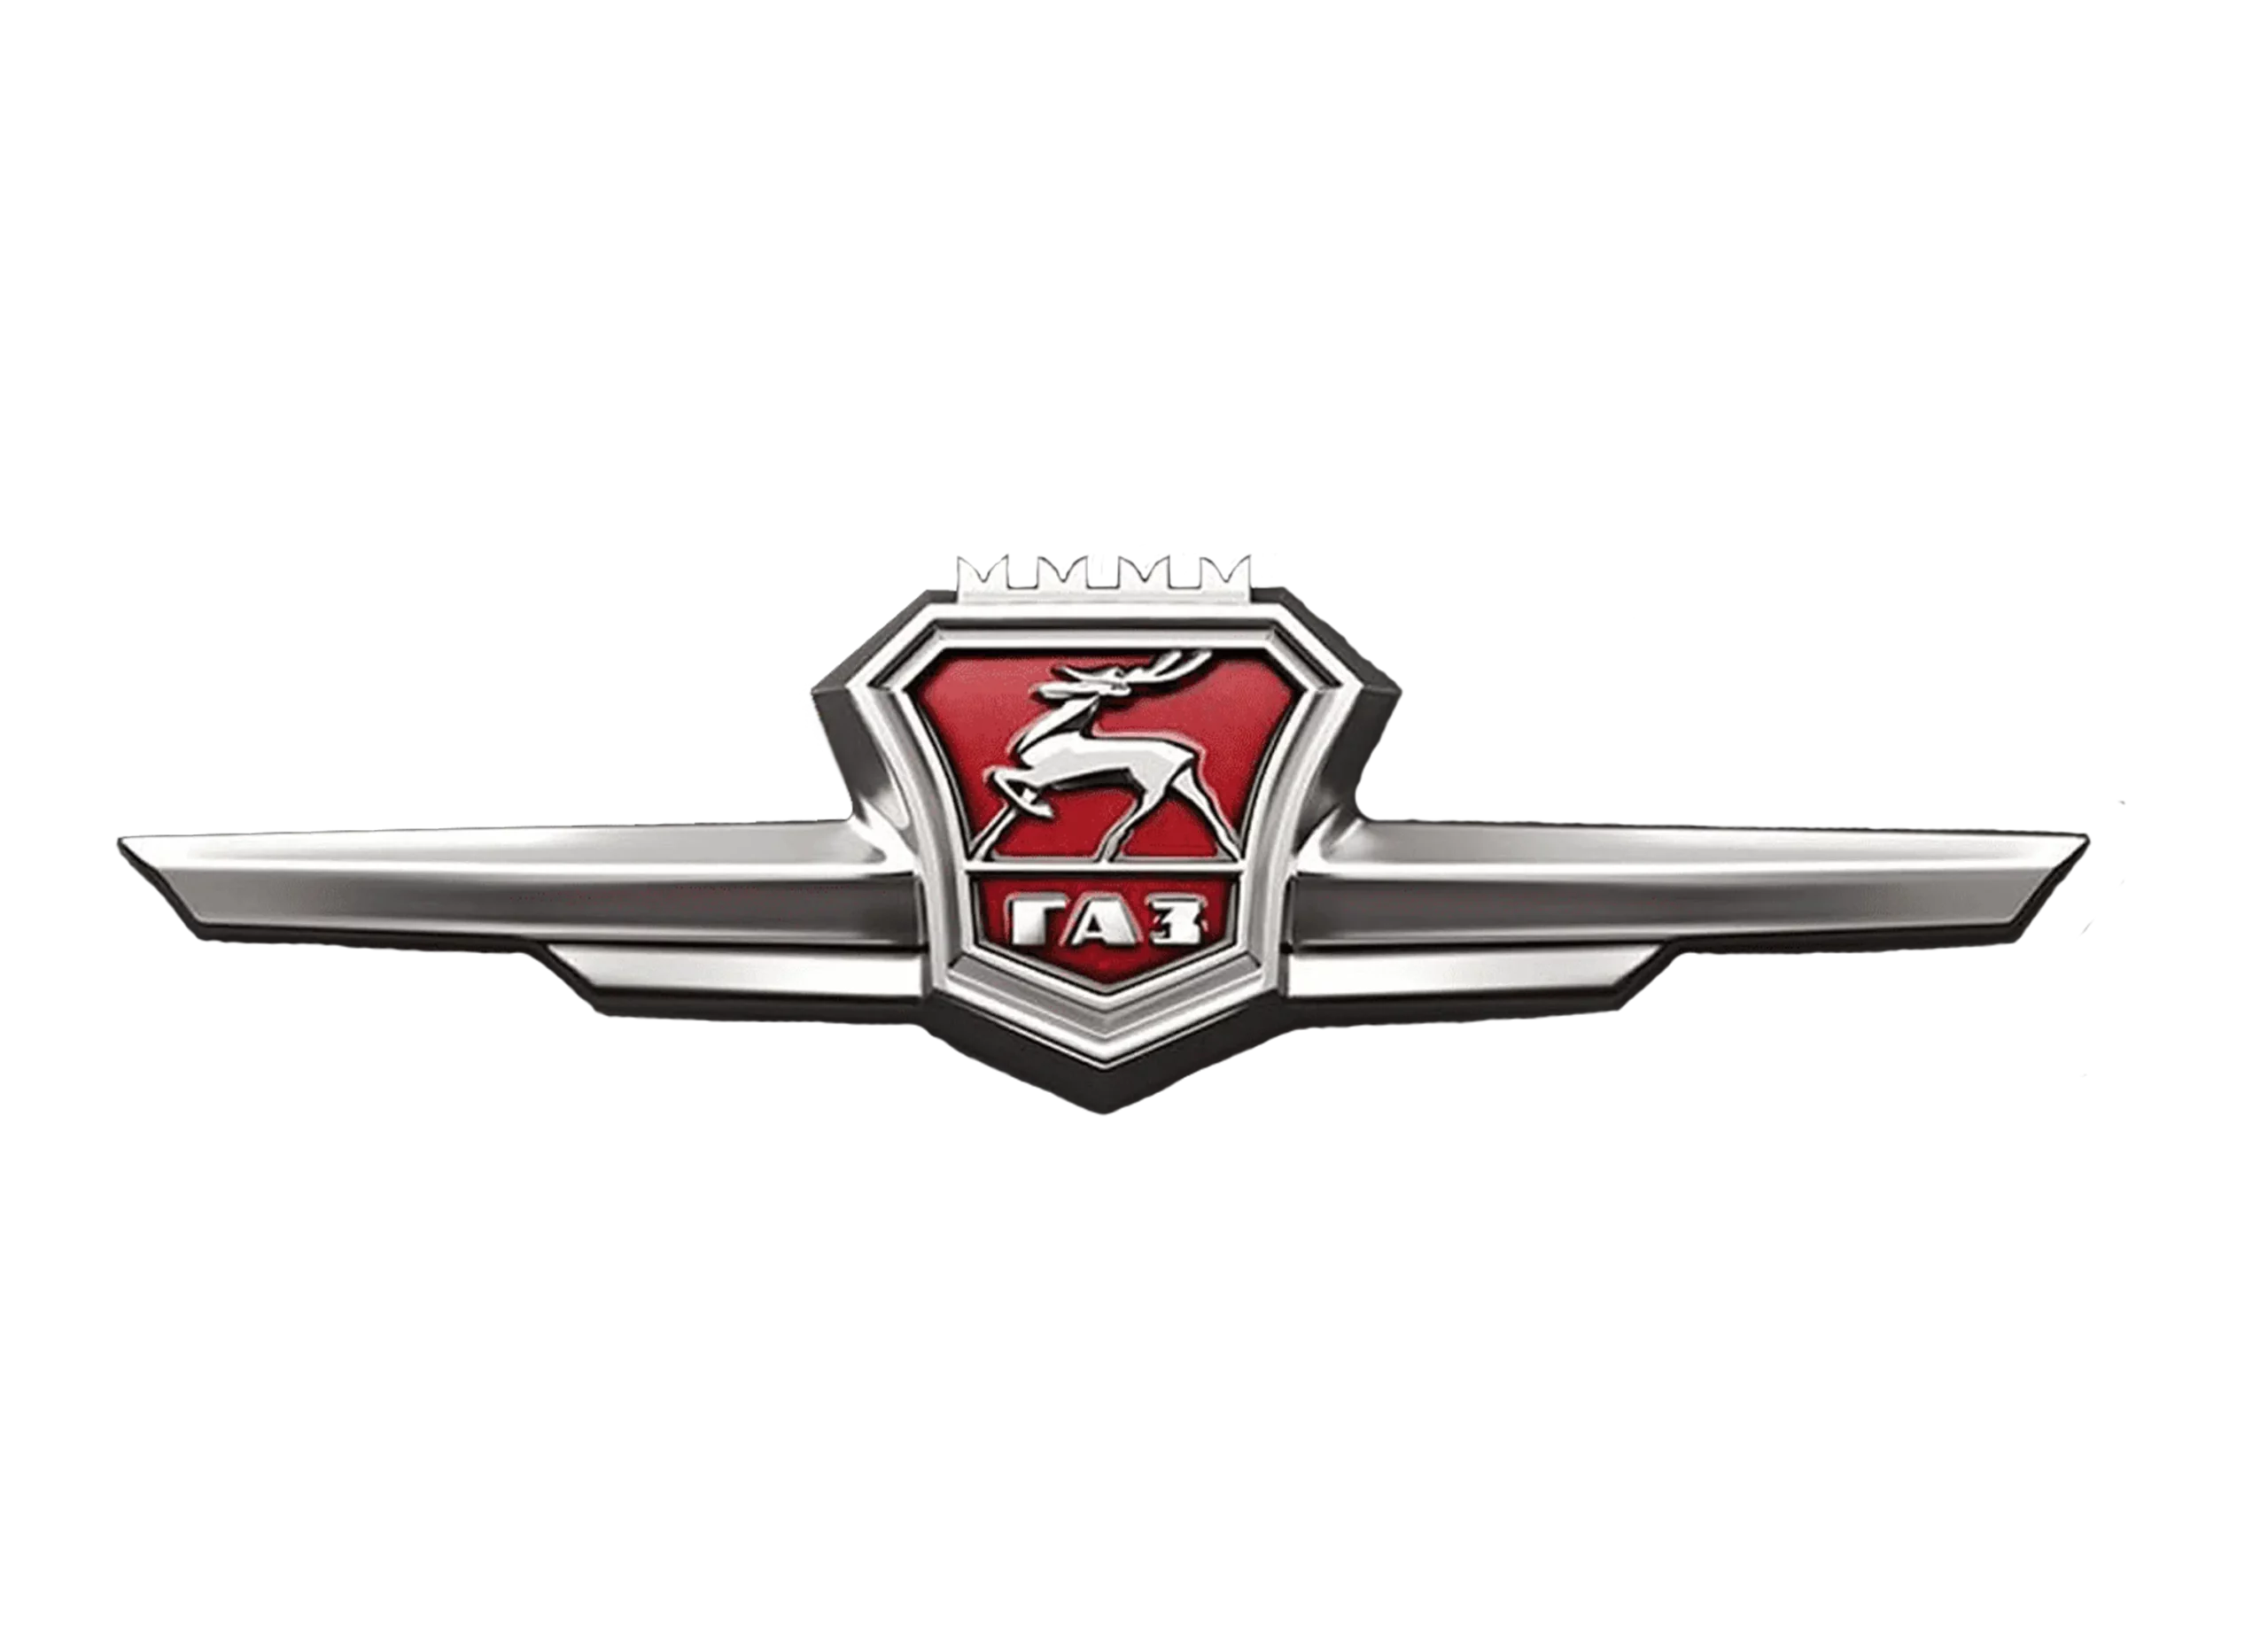 GAZ logo 1956-1986